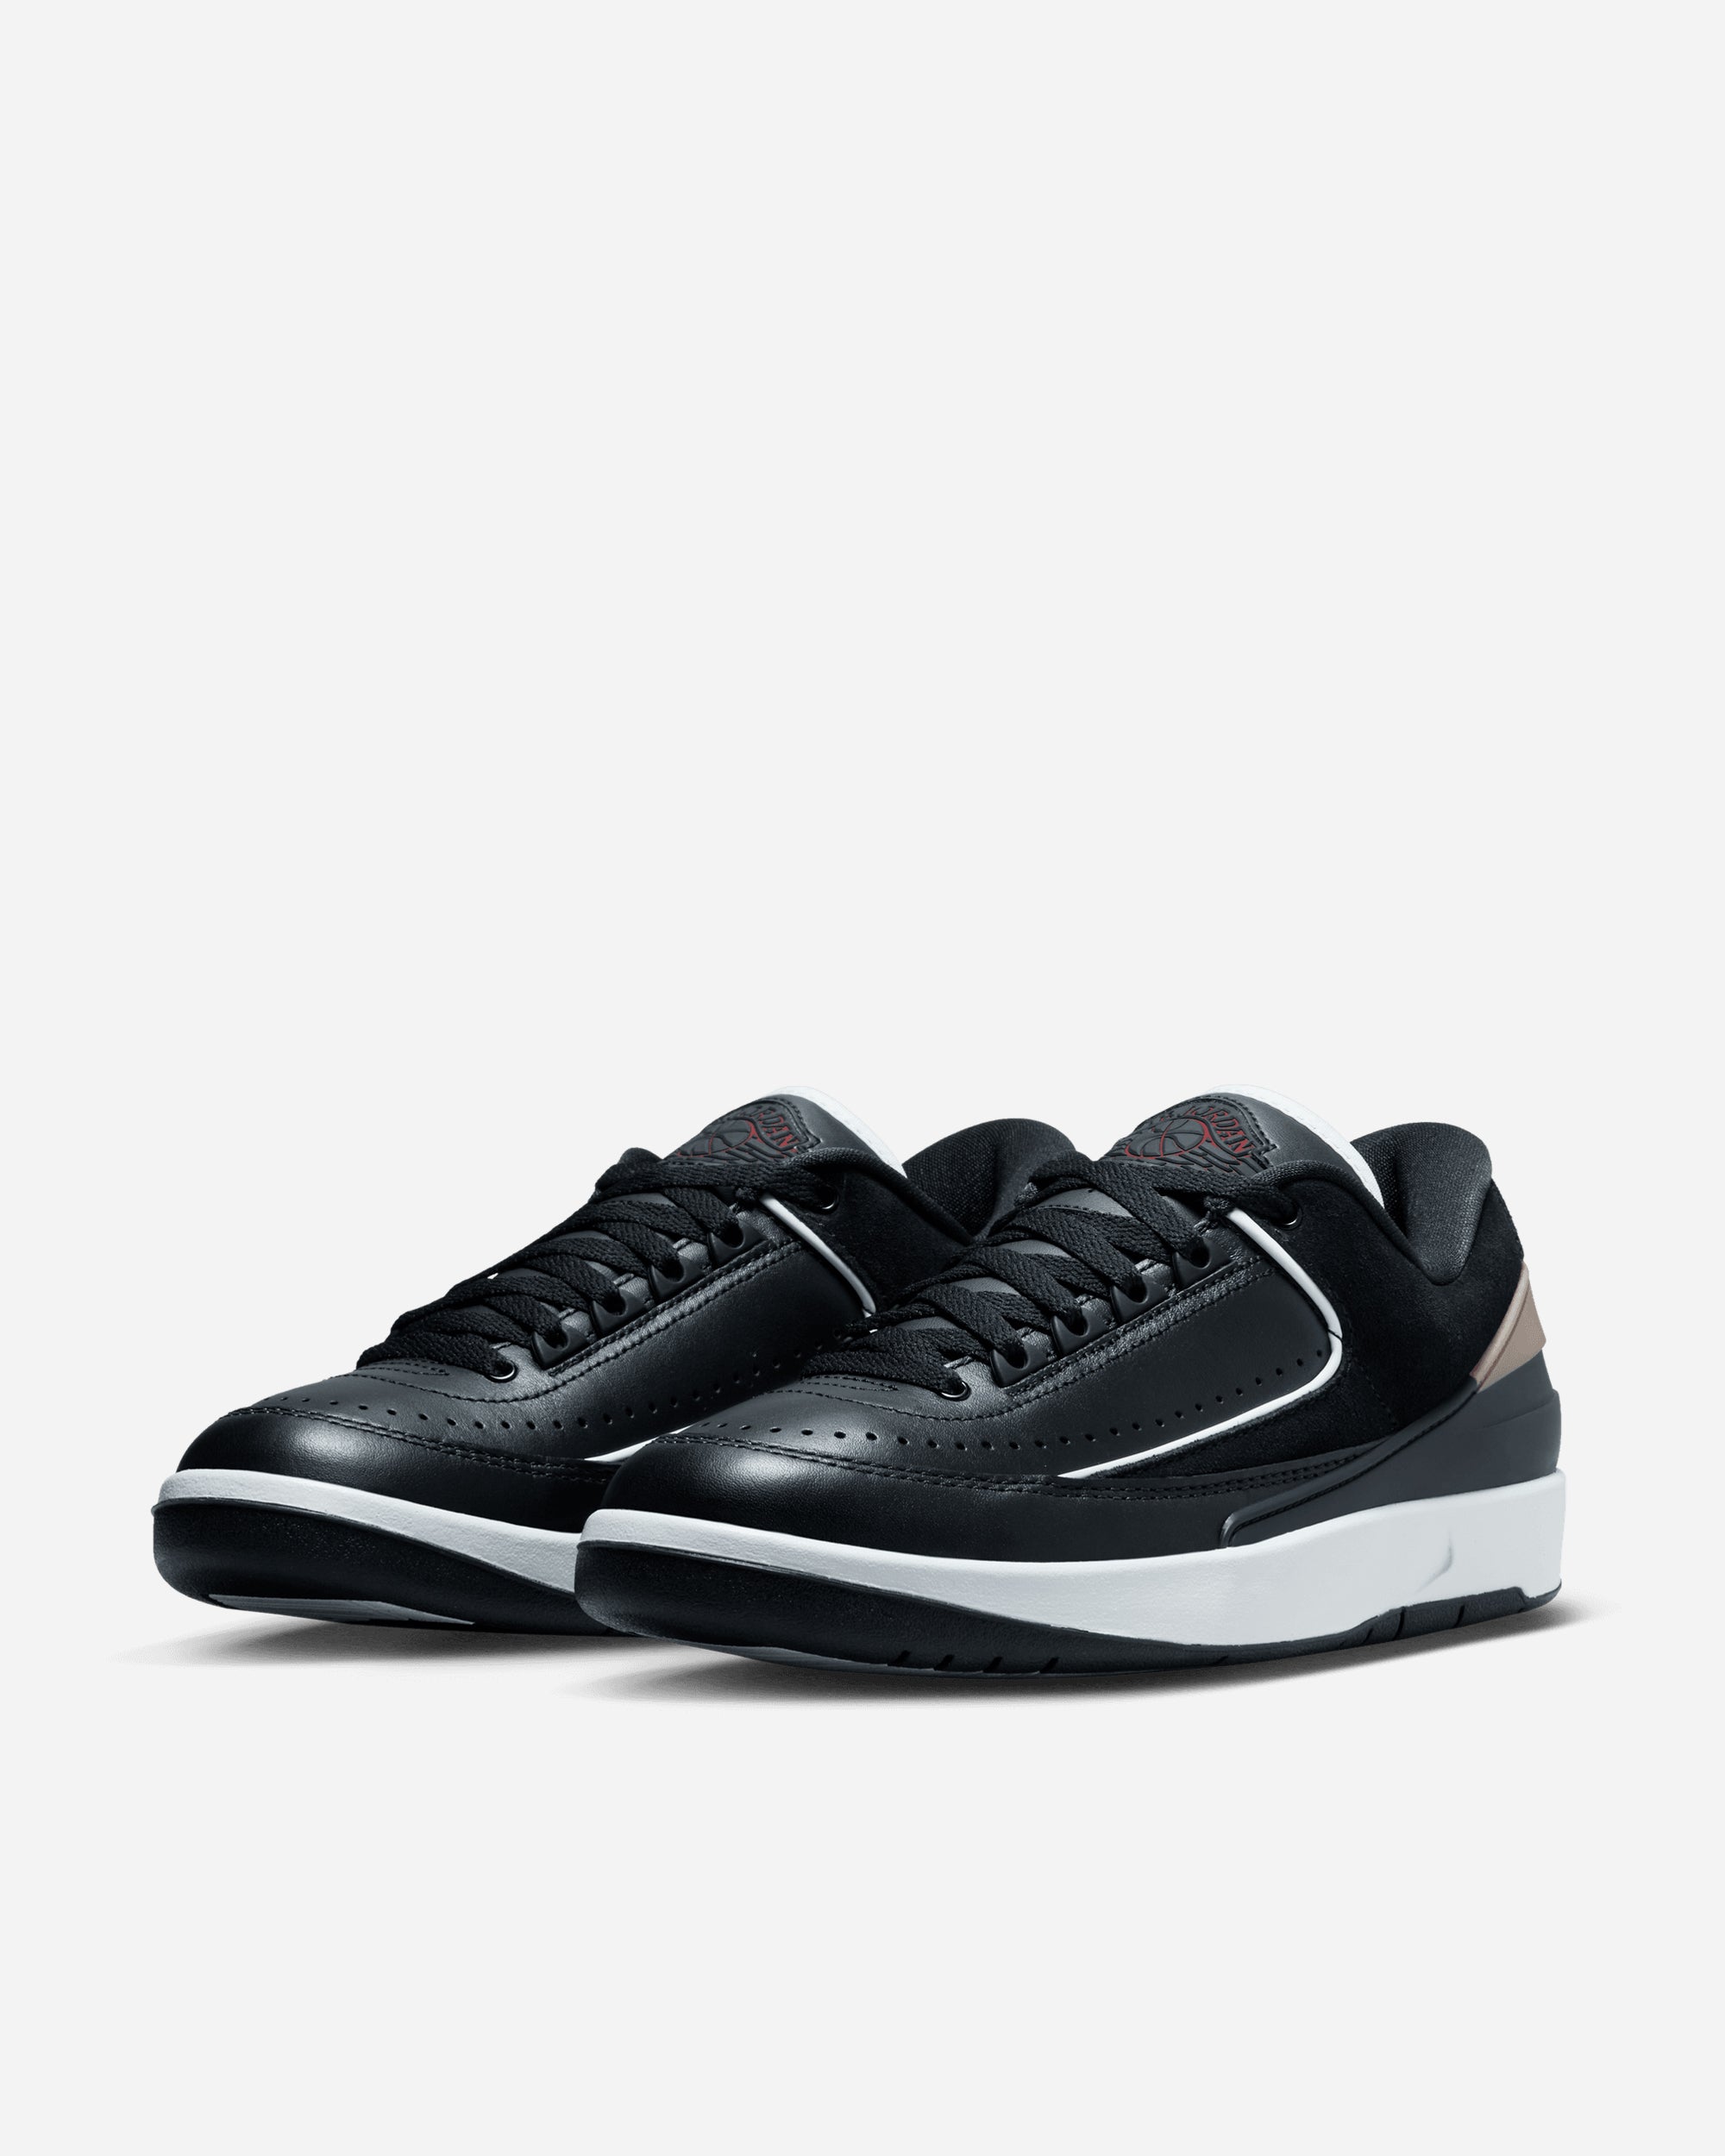 Nike Air Jordan 2 Retro Low Black/Gold DX4401-001